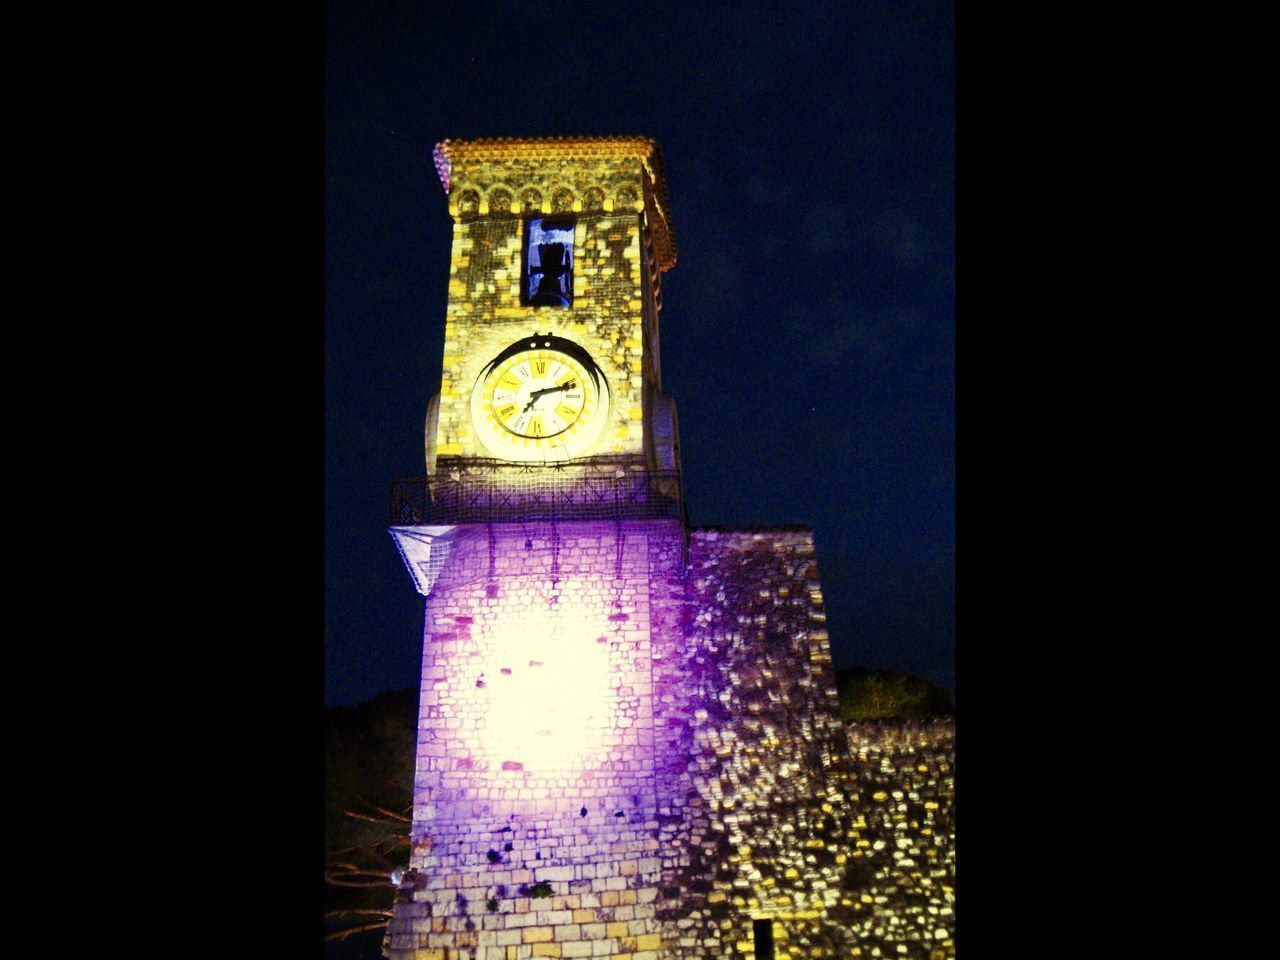 ILLUMINATED CLOCK TOWER AT NIGHT